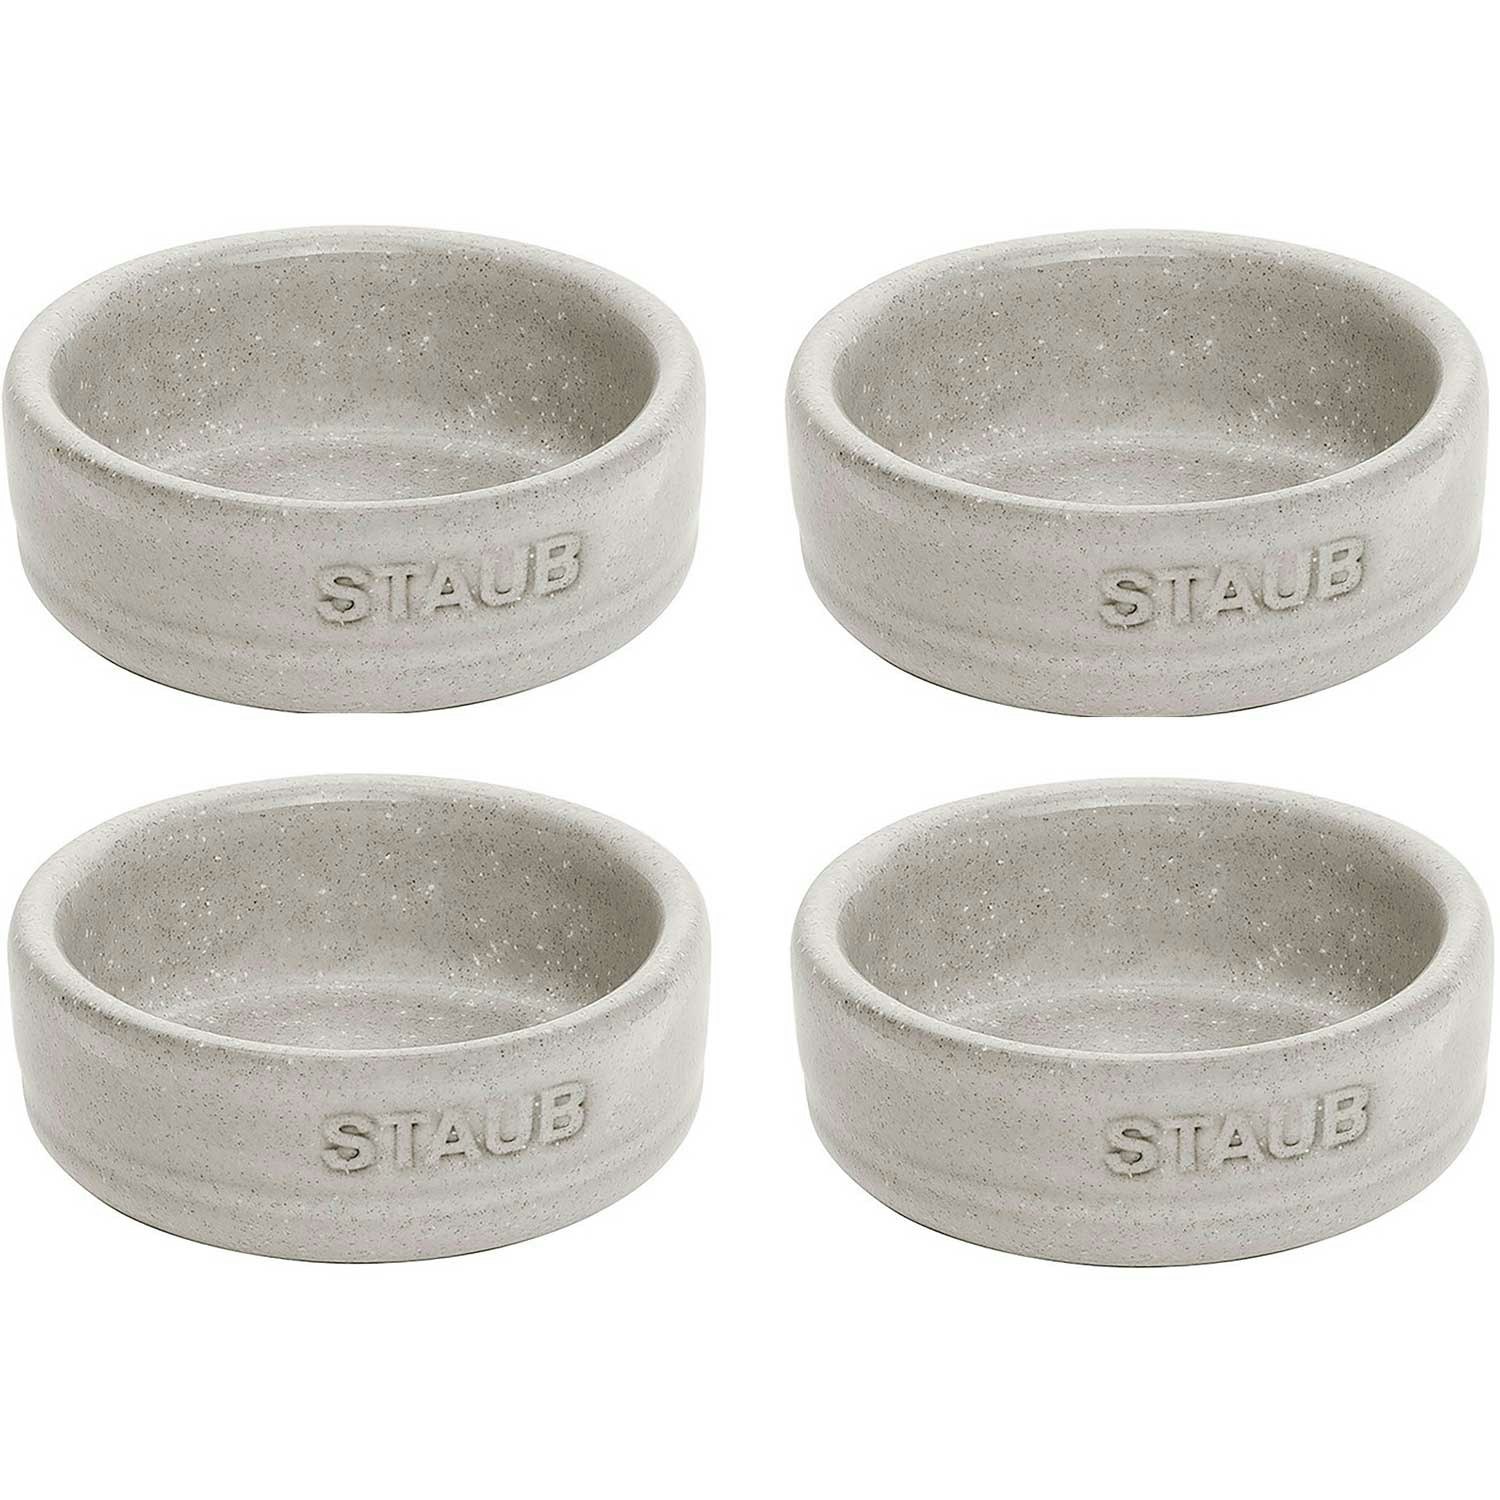 https://royaldesign.com/image/2/staub-new-white-truffle-portions-miniformar-4-pck-5cm-0